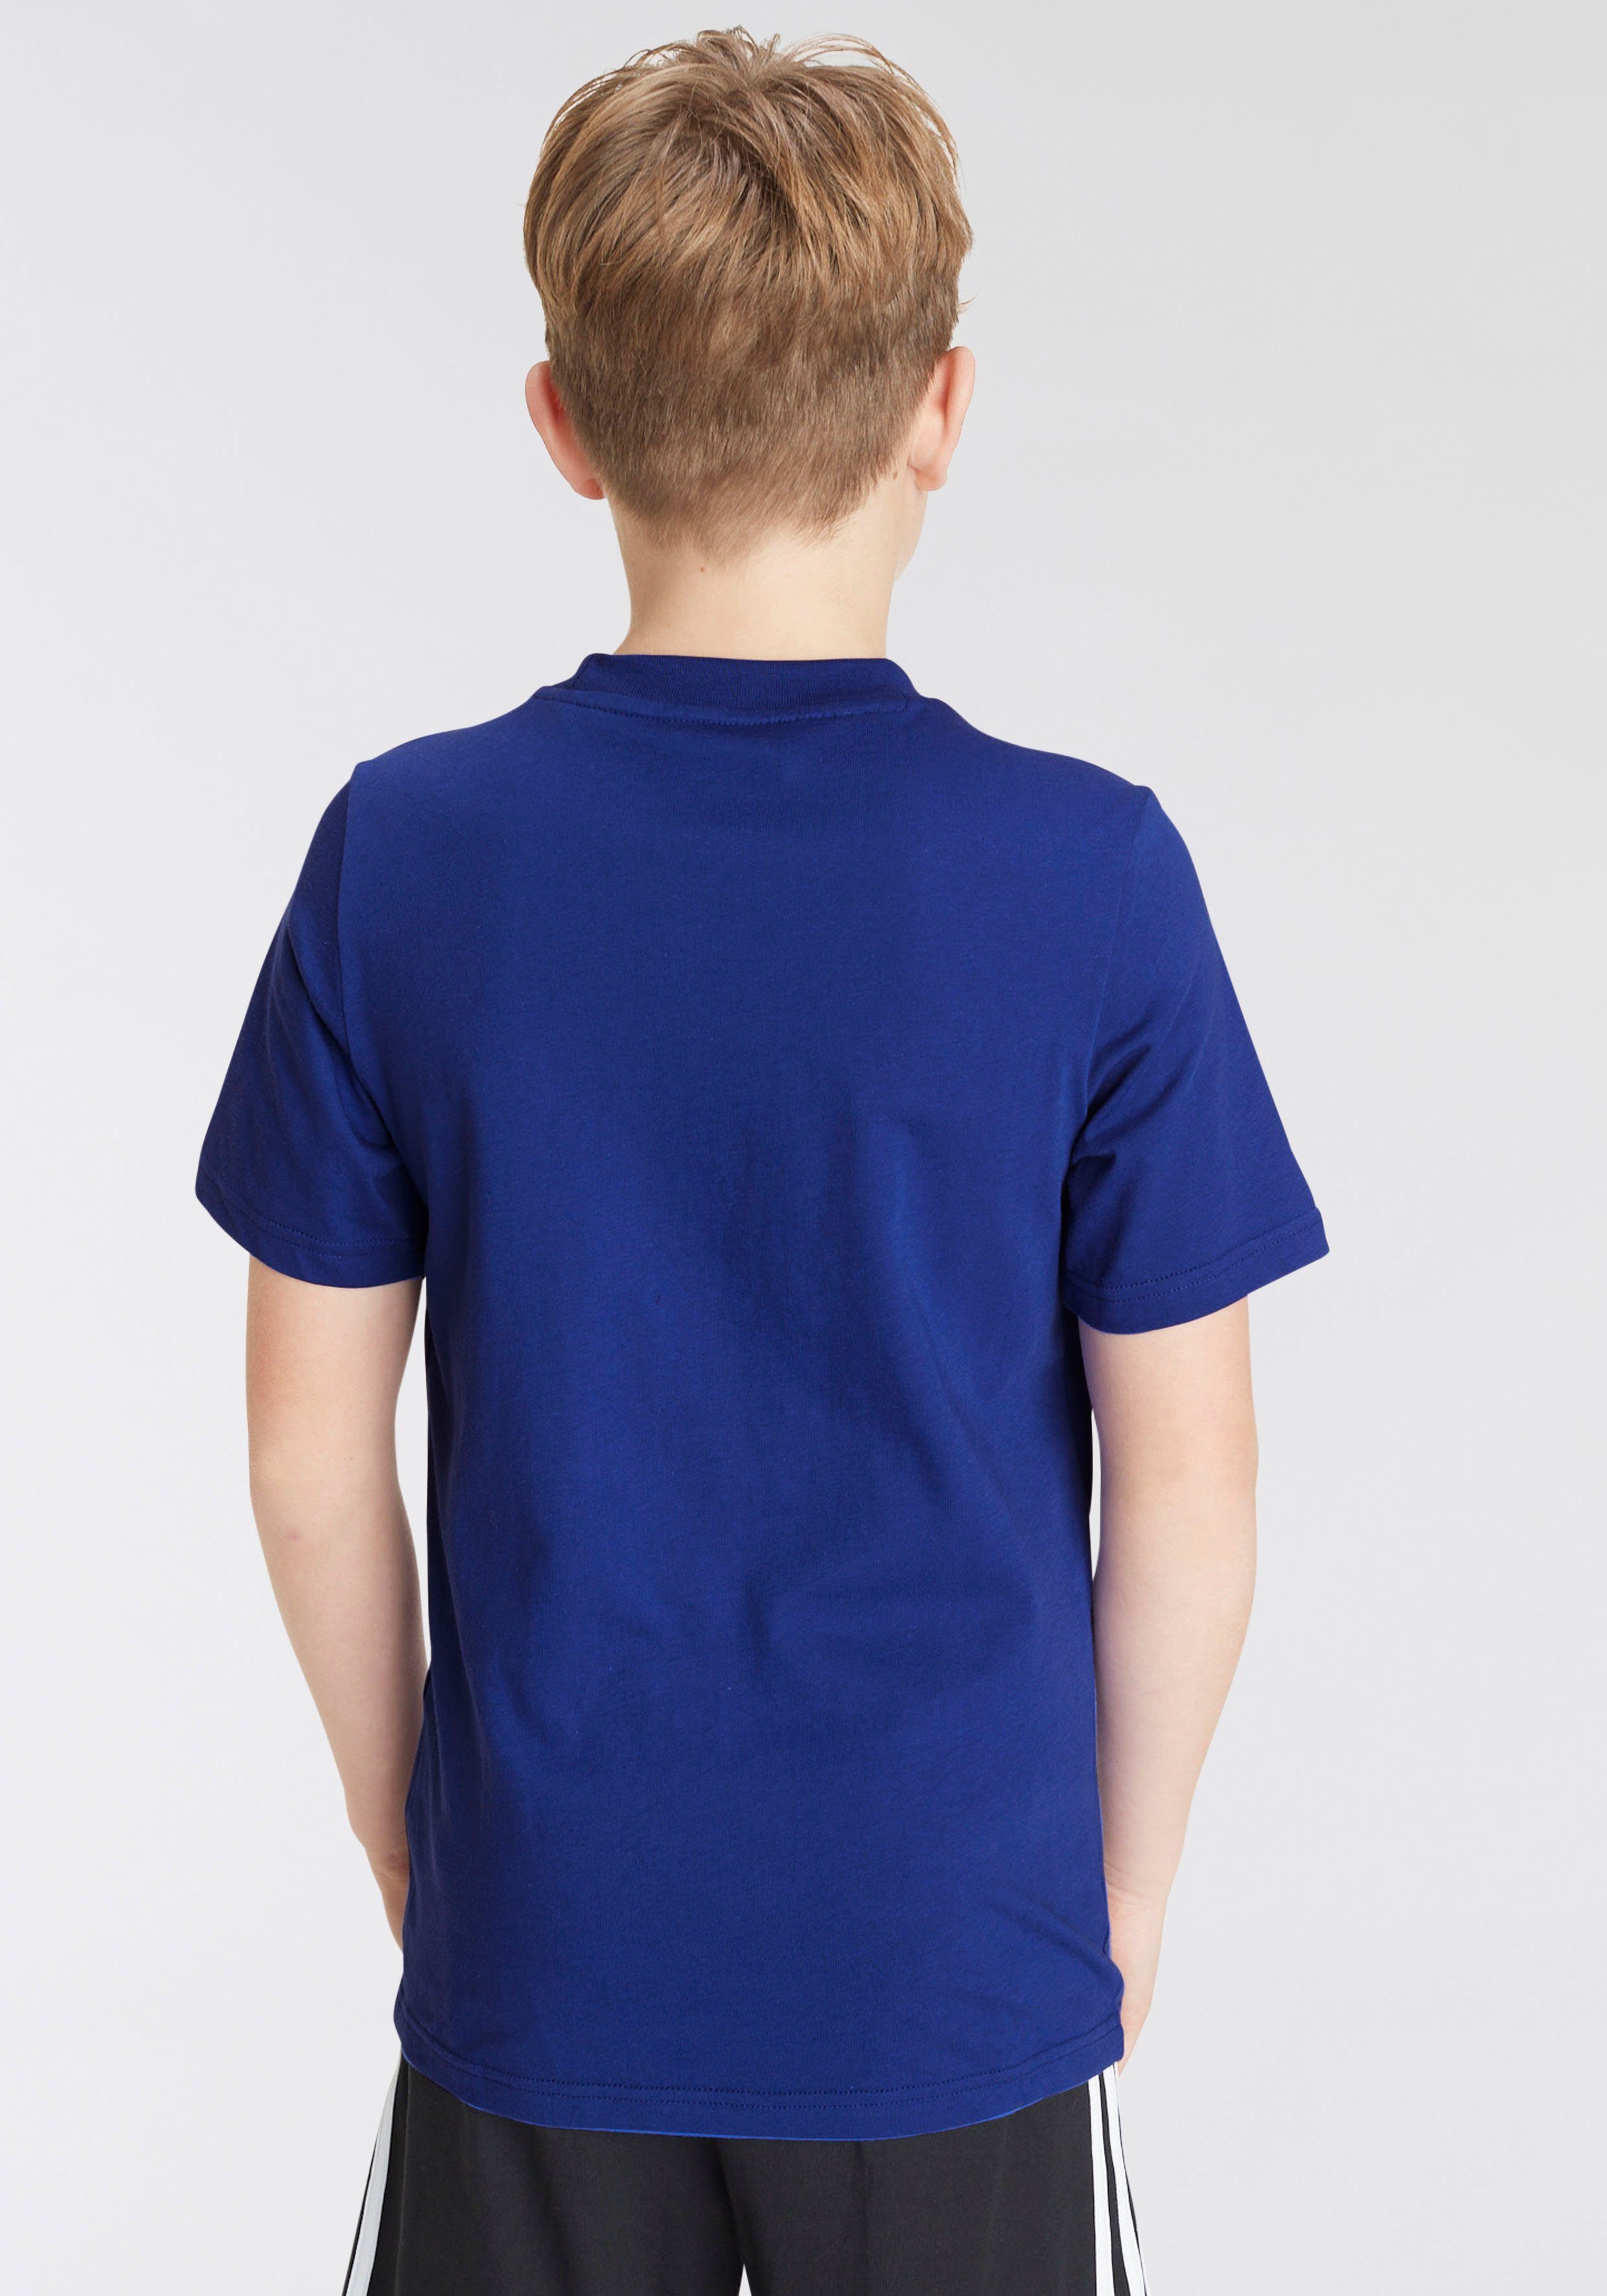 T-Shirt adidas / SMALL LOGO White Blue Lucid ESSENTIALS Sportswear COTTON Semi